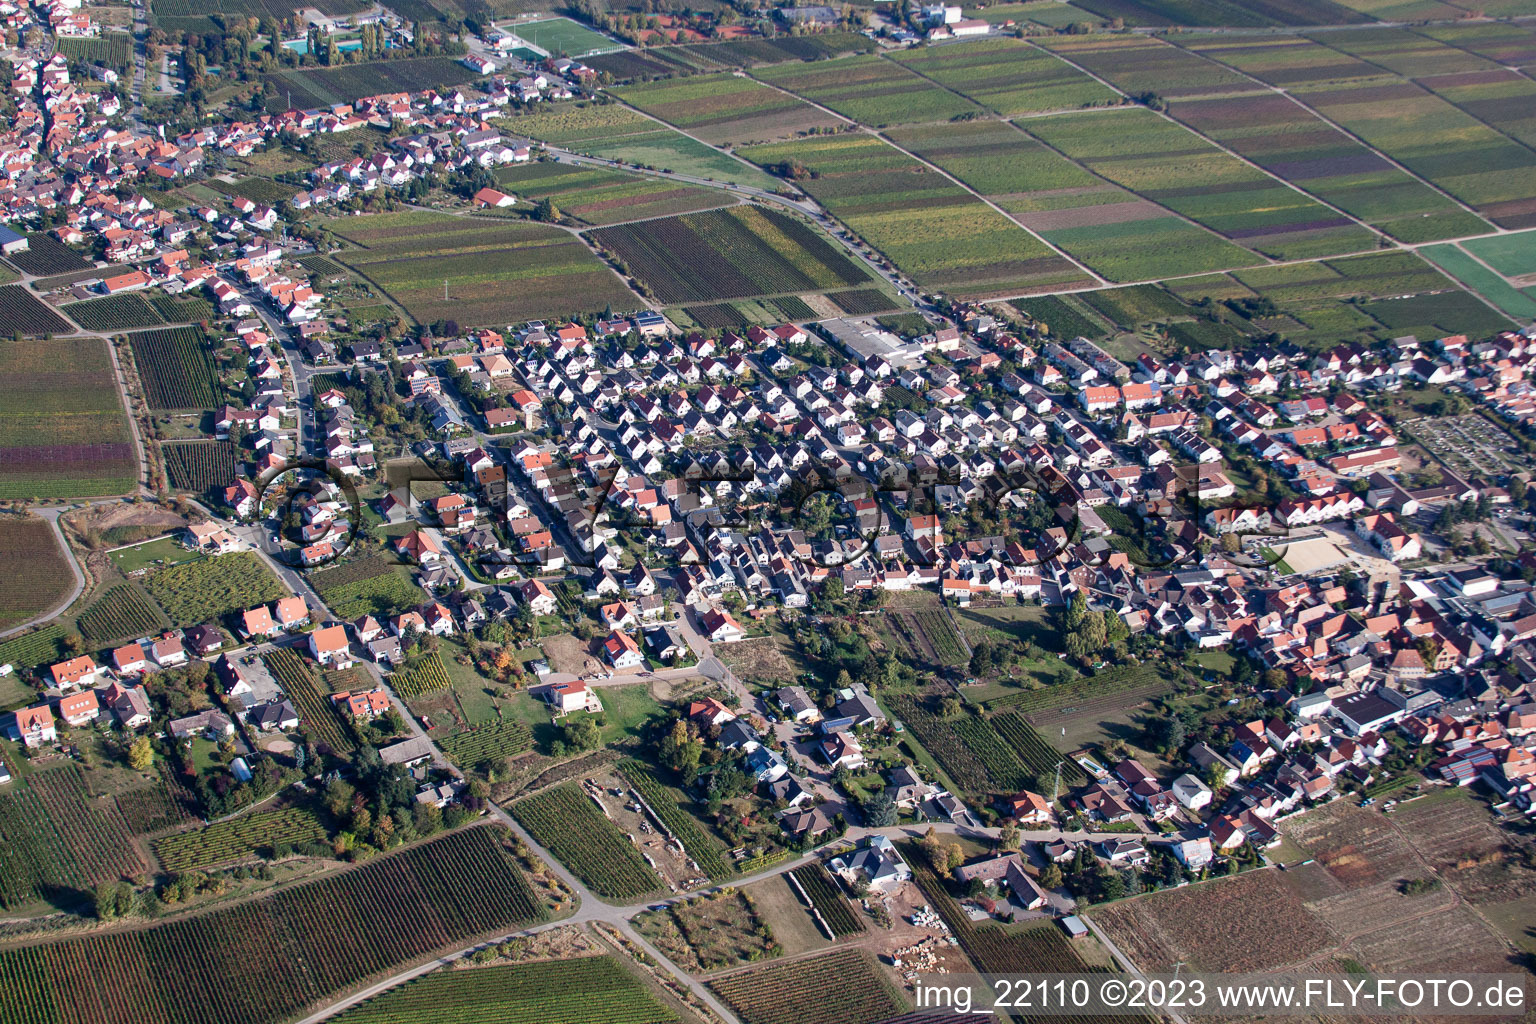 Aerial photograpy of District Diedesfeld in Neustadt an der Weinstraße in the state Rhineland-Palatinate, Germany